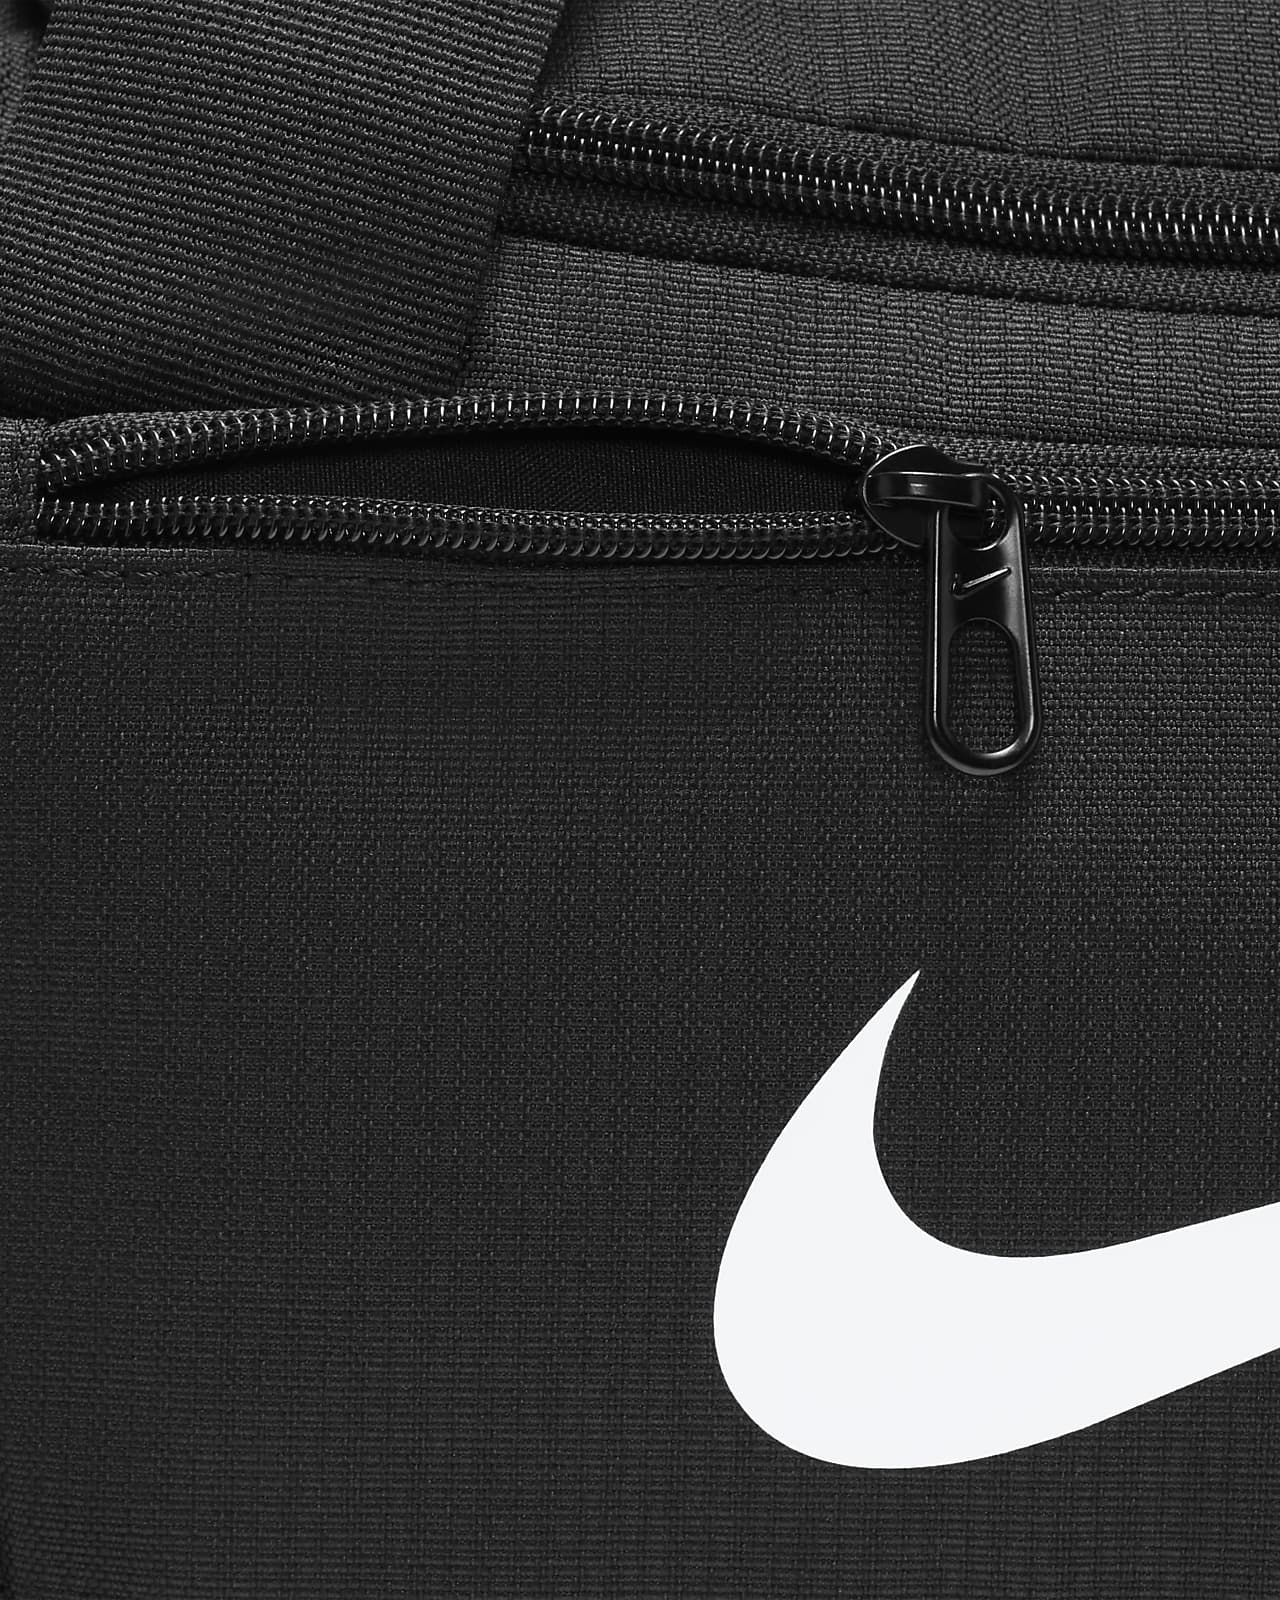 Nike Brasilia 9.5 Training Small Duffel Bag, Pink, Brasilia 9.5 Small  Training Duffel Bag : : Sports & Outdoors